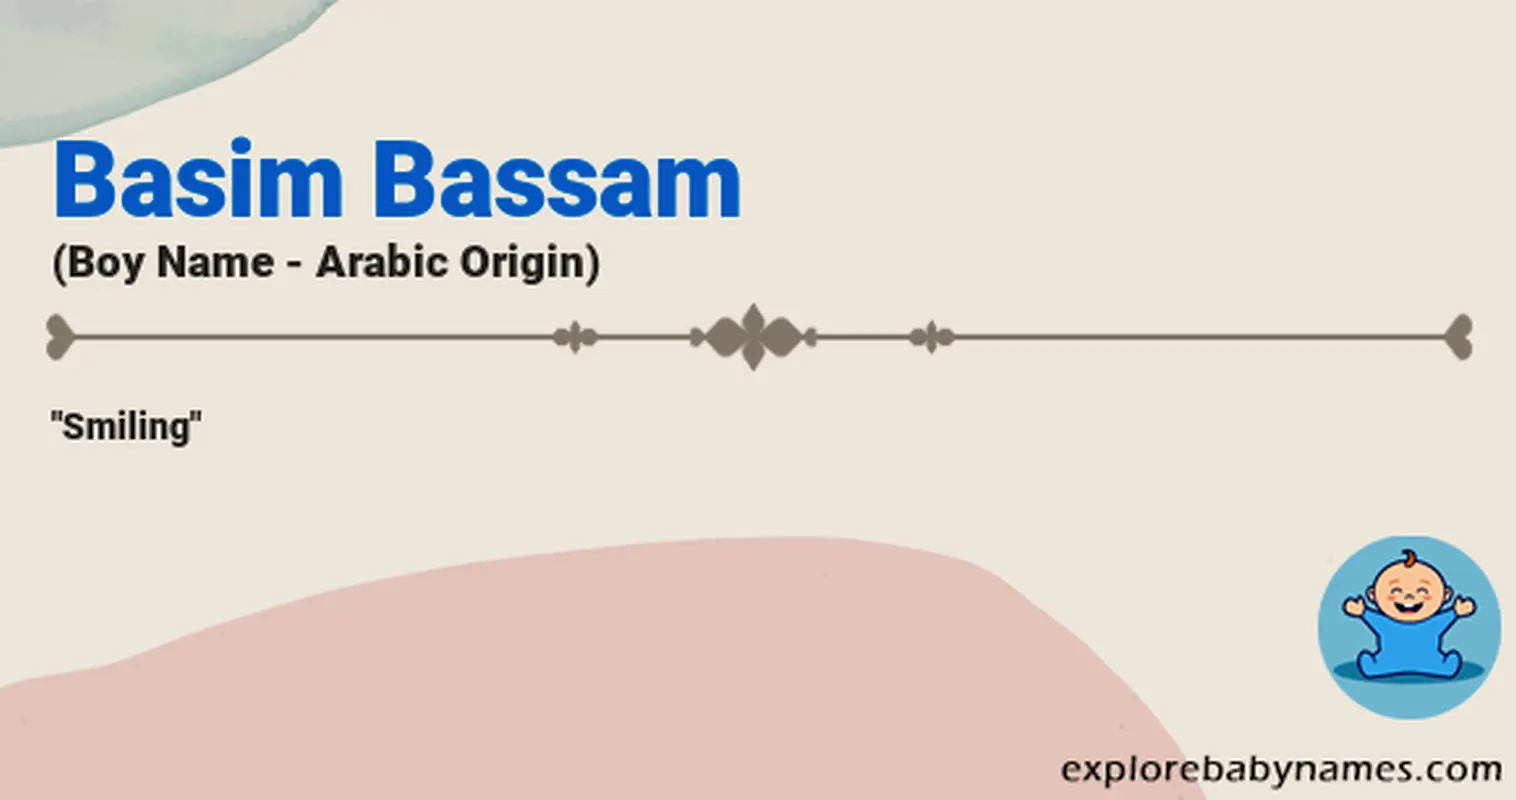 Meaning of Basim Bassam